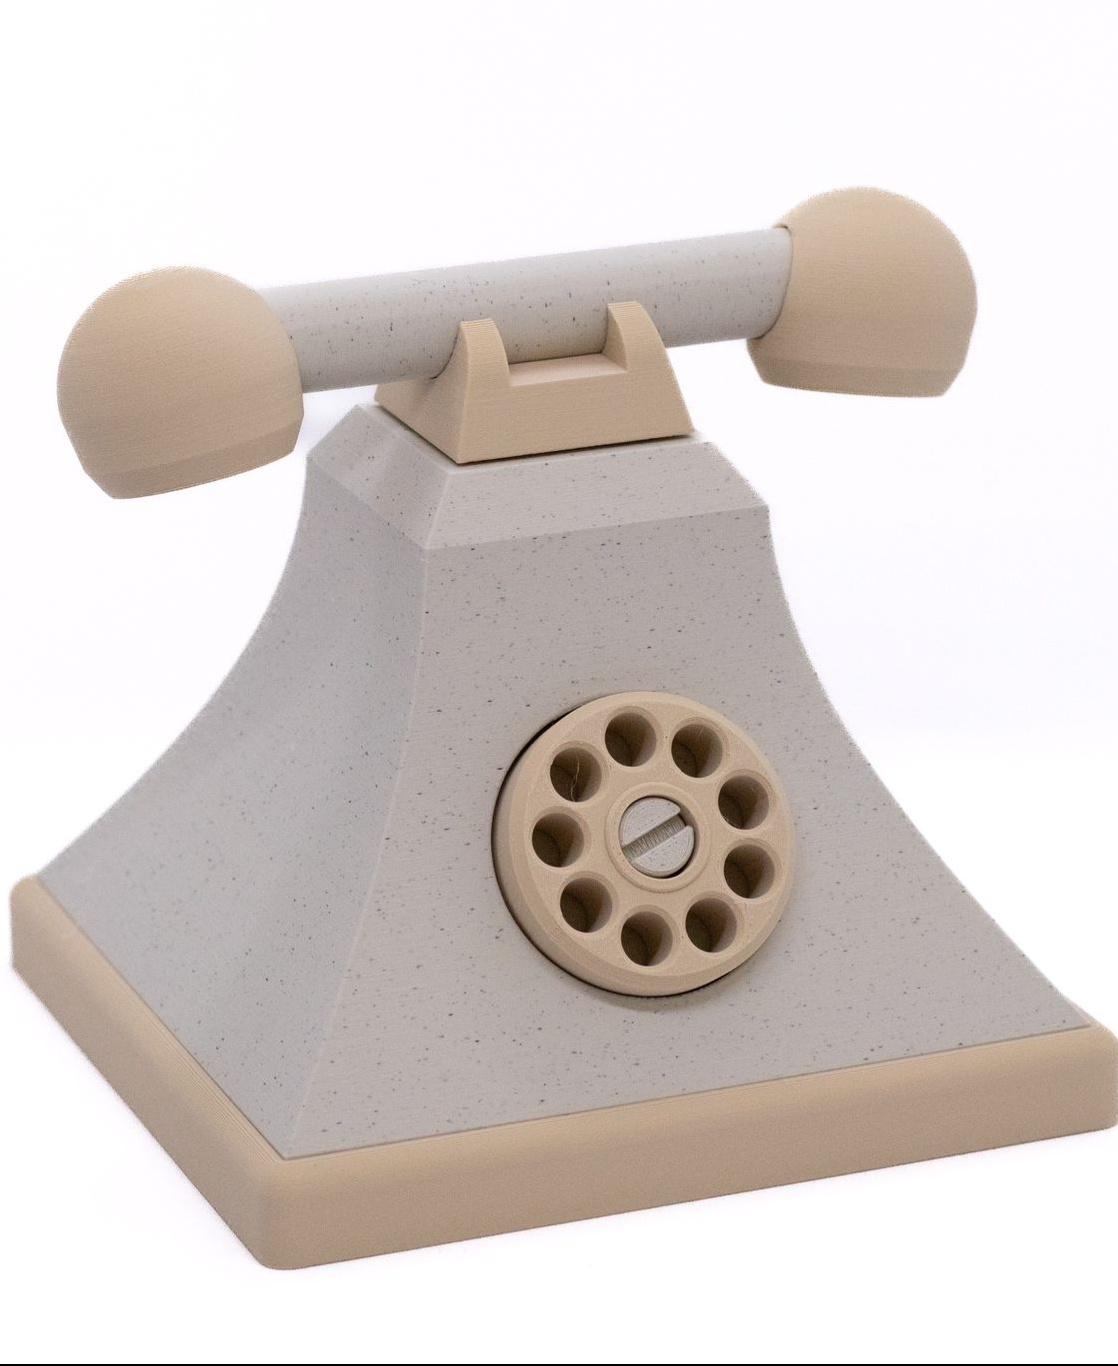 Telephone 6.3 - Telephone 6.3
FIBERLOGY FILAMENTS - 3d model